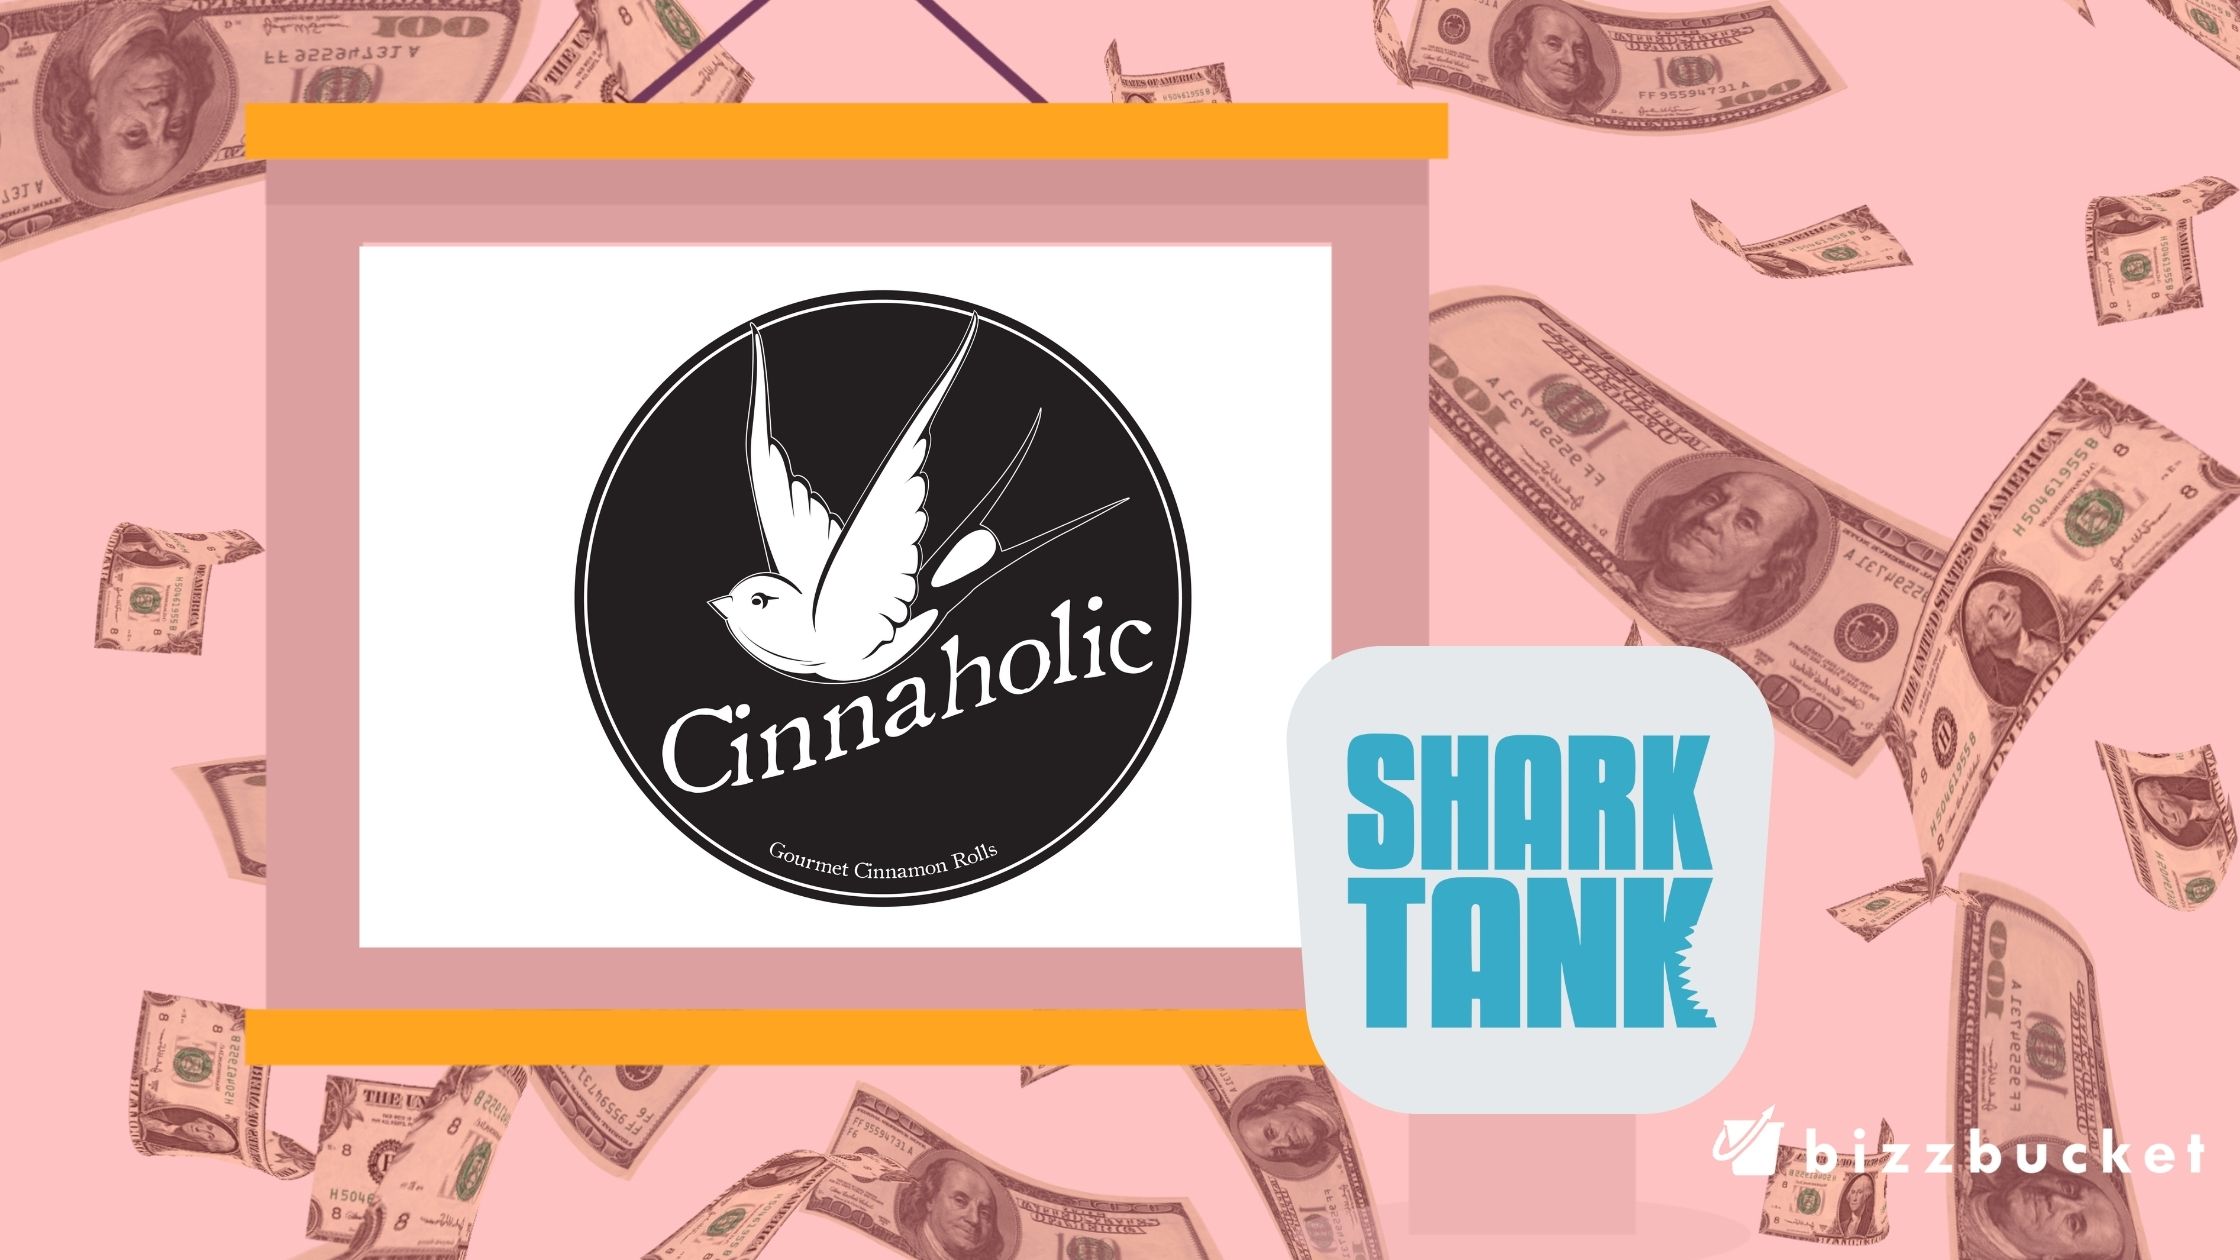 Cinnaholic shark tank update